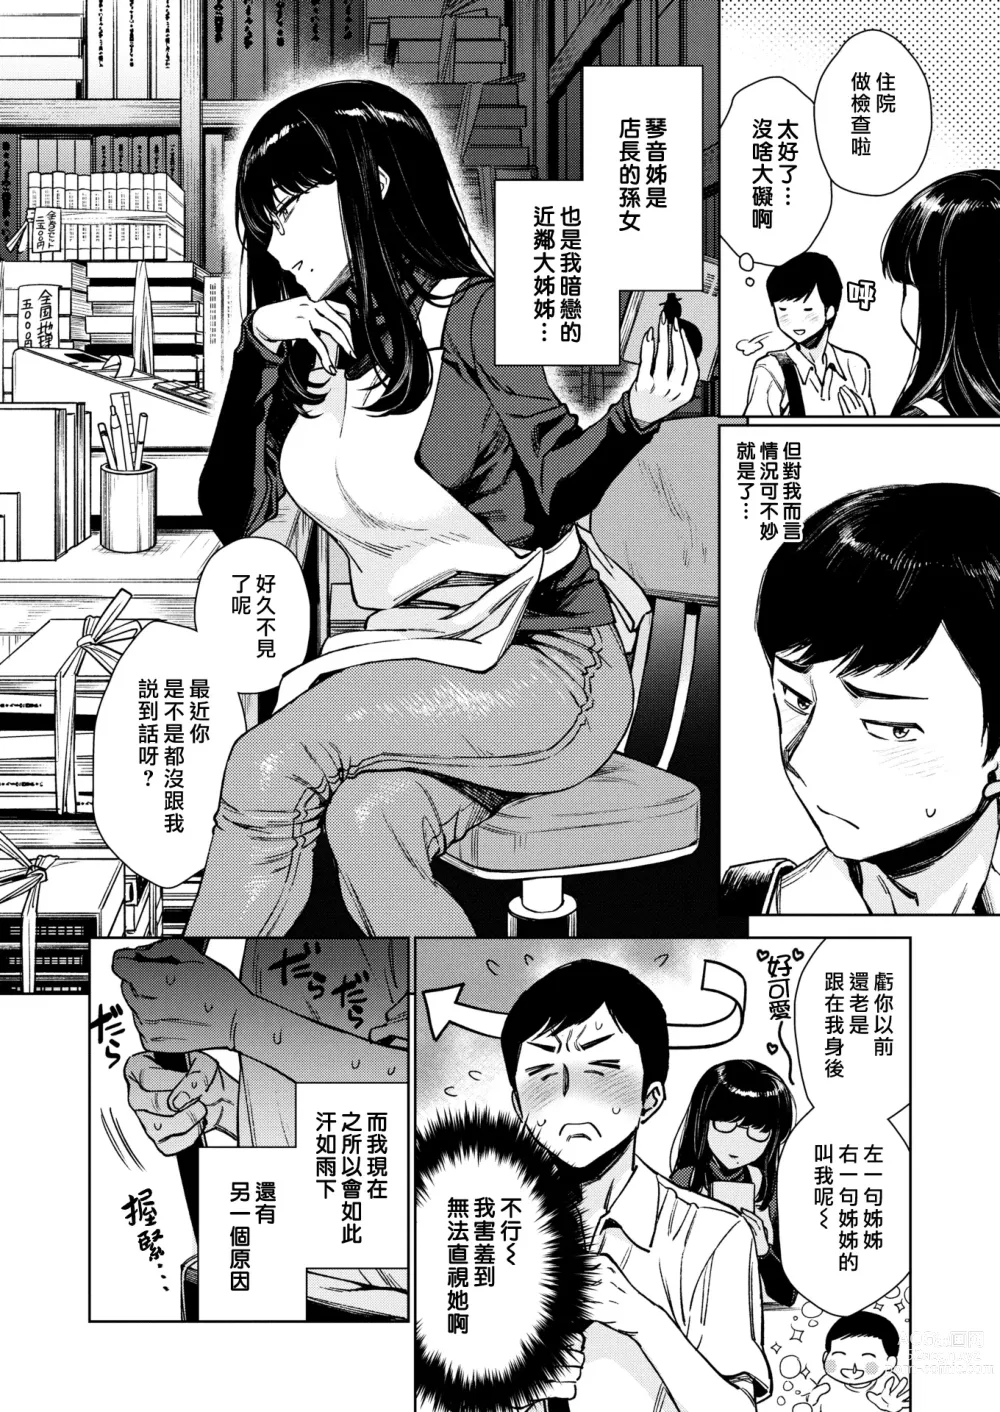 Page 2 of manga 琴音交纏